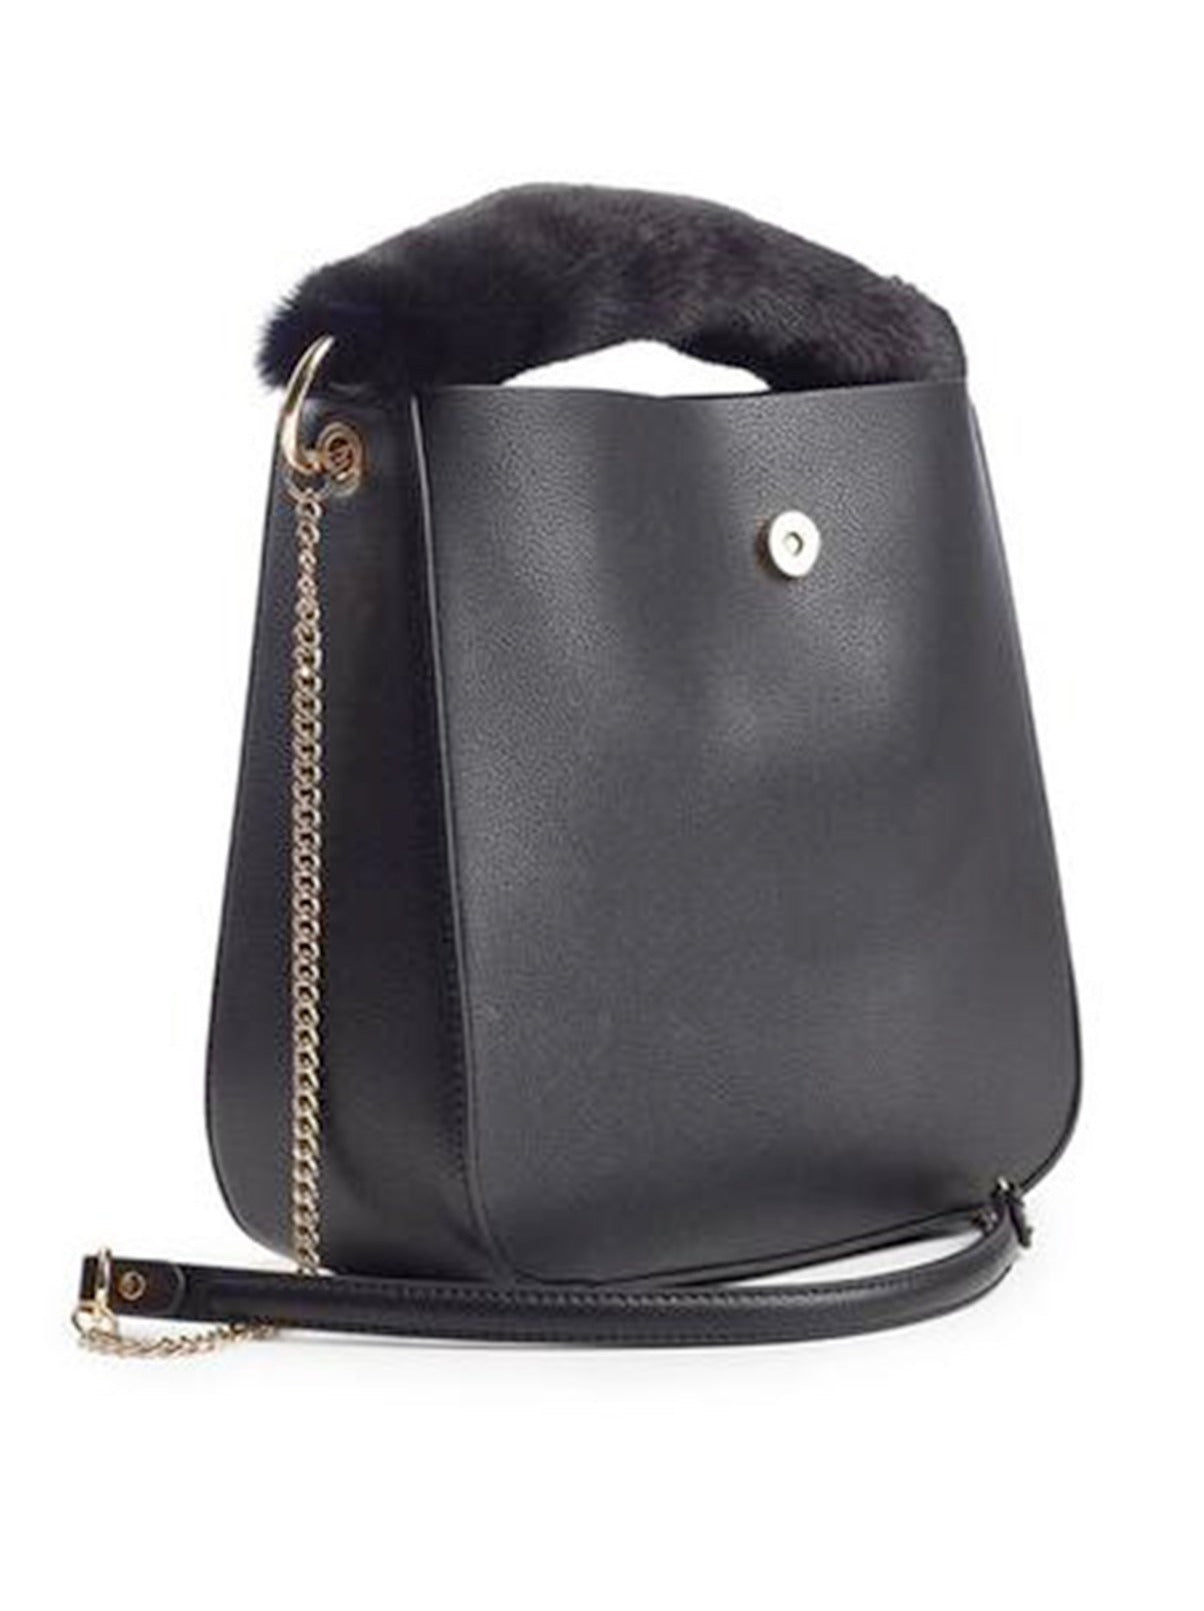 Krone 1 - Bag strap with zipper in mink